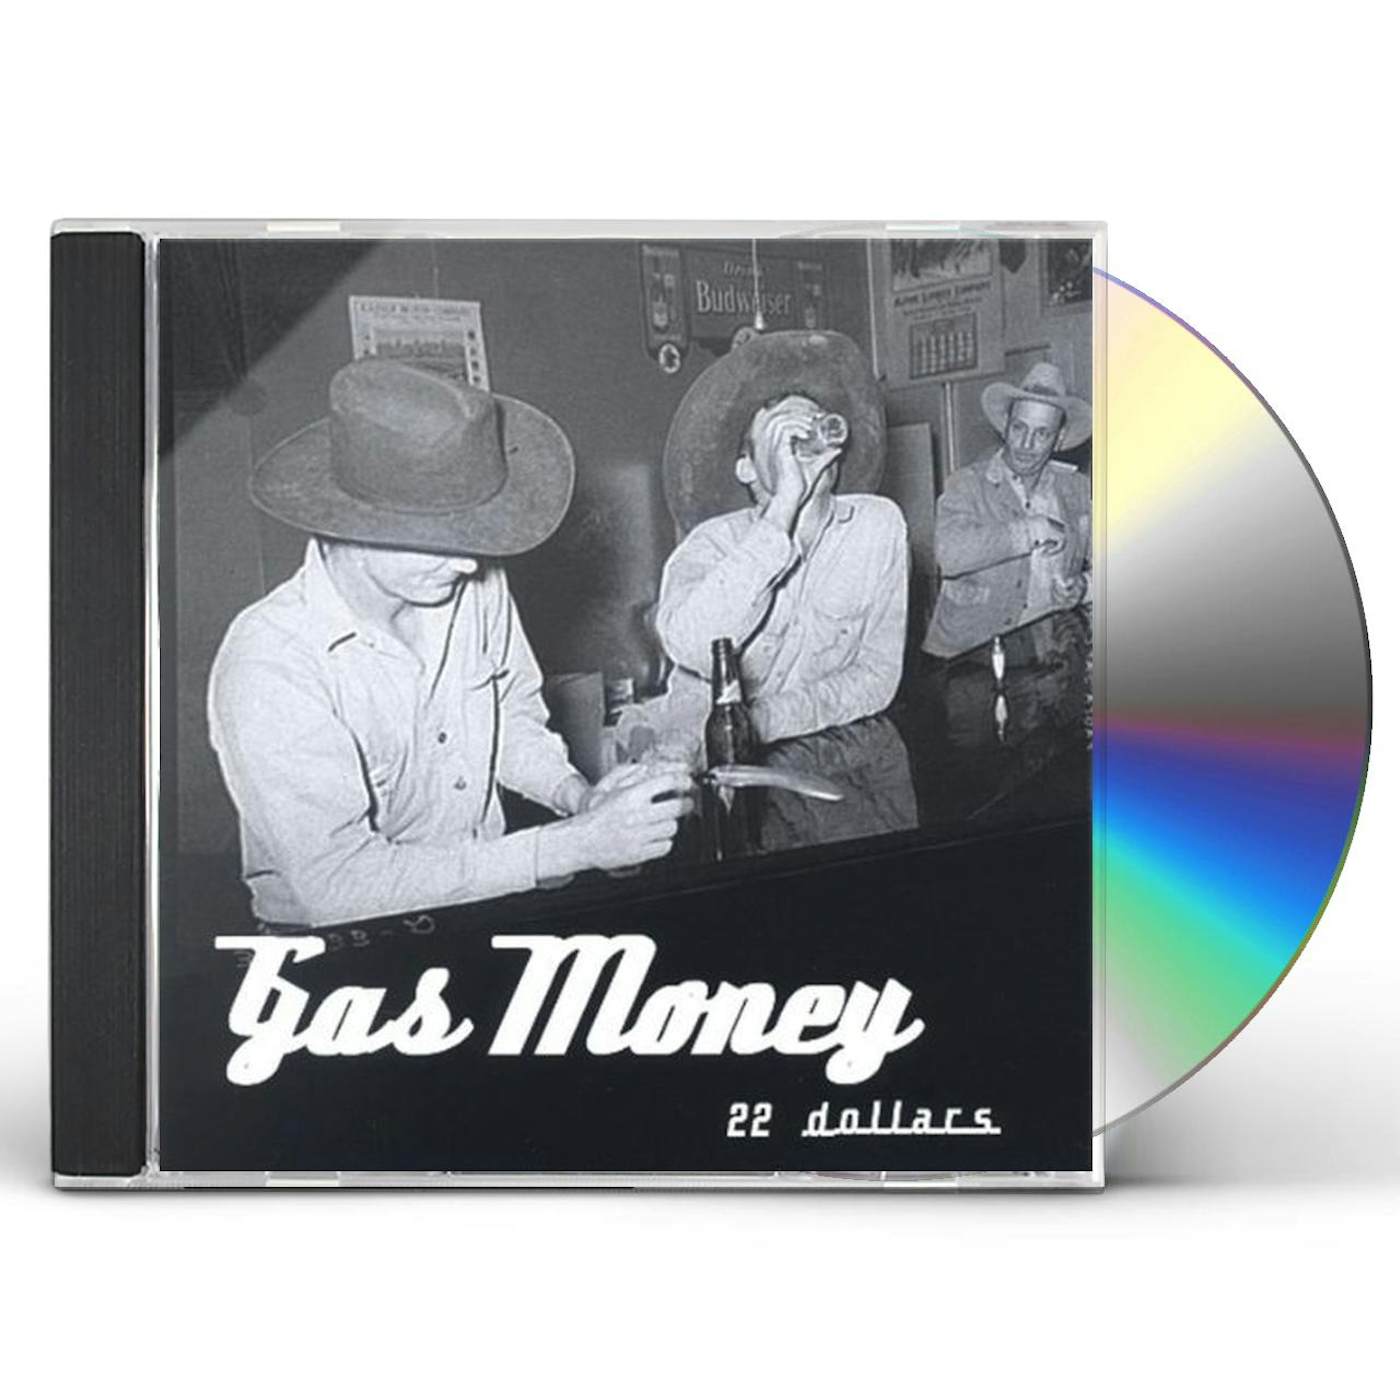 Gas Money 22 DOLLARS CD